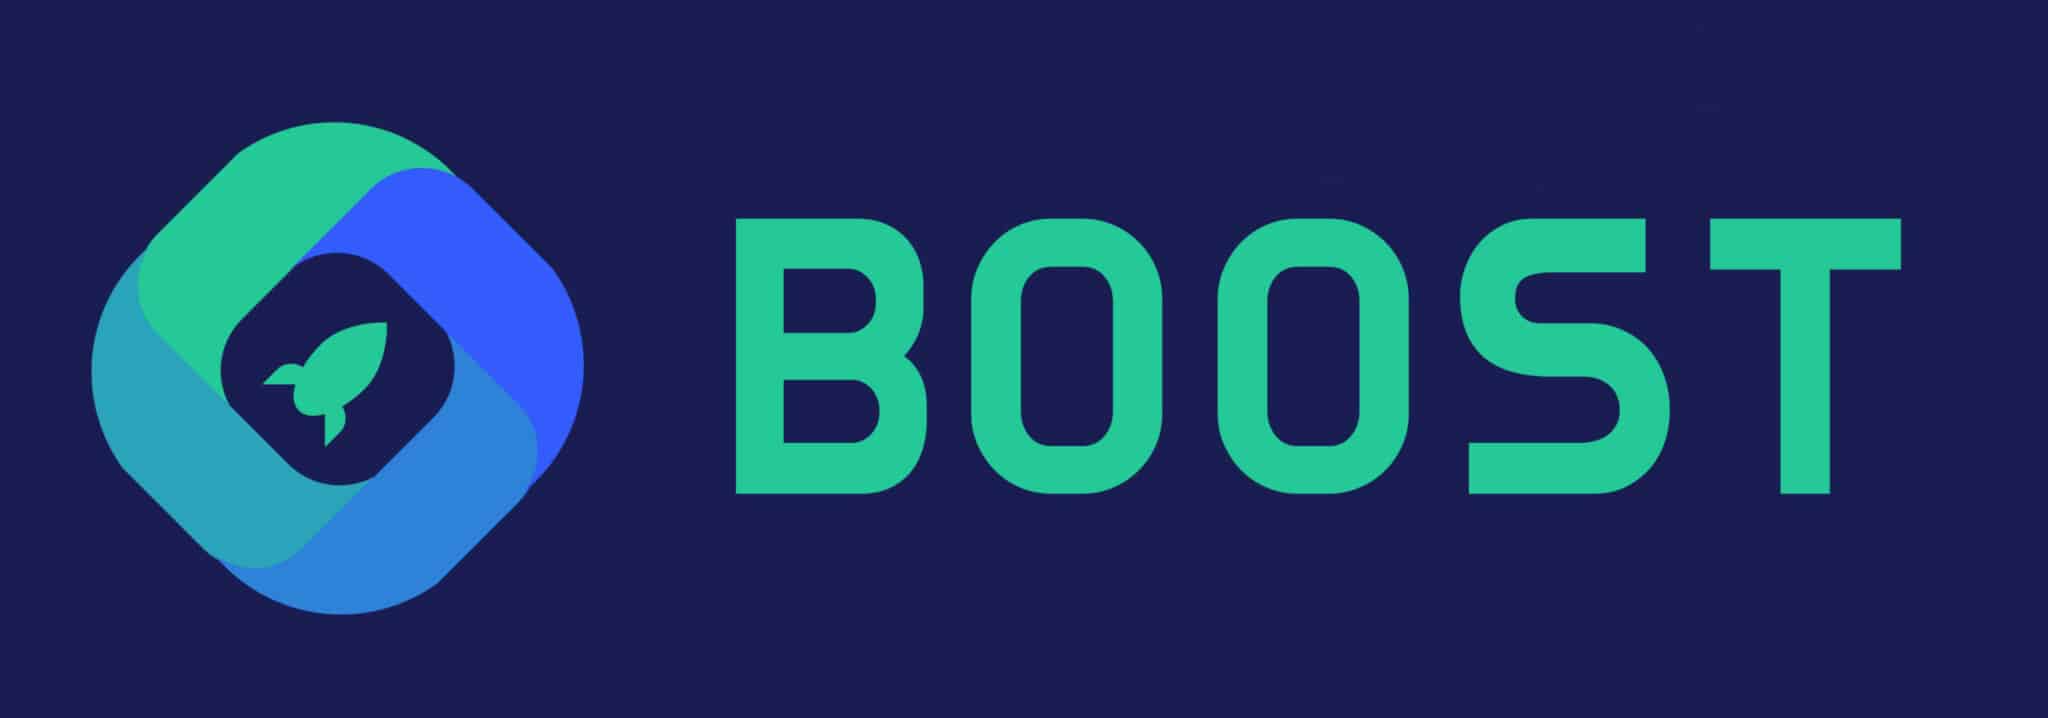 Boost logo horizontal